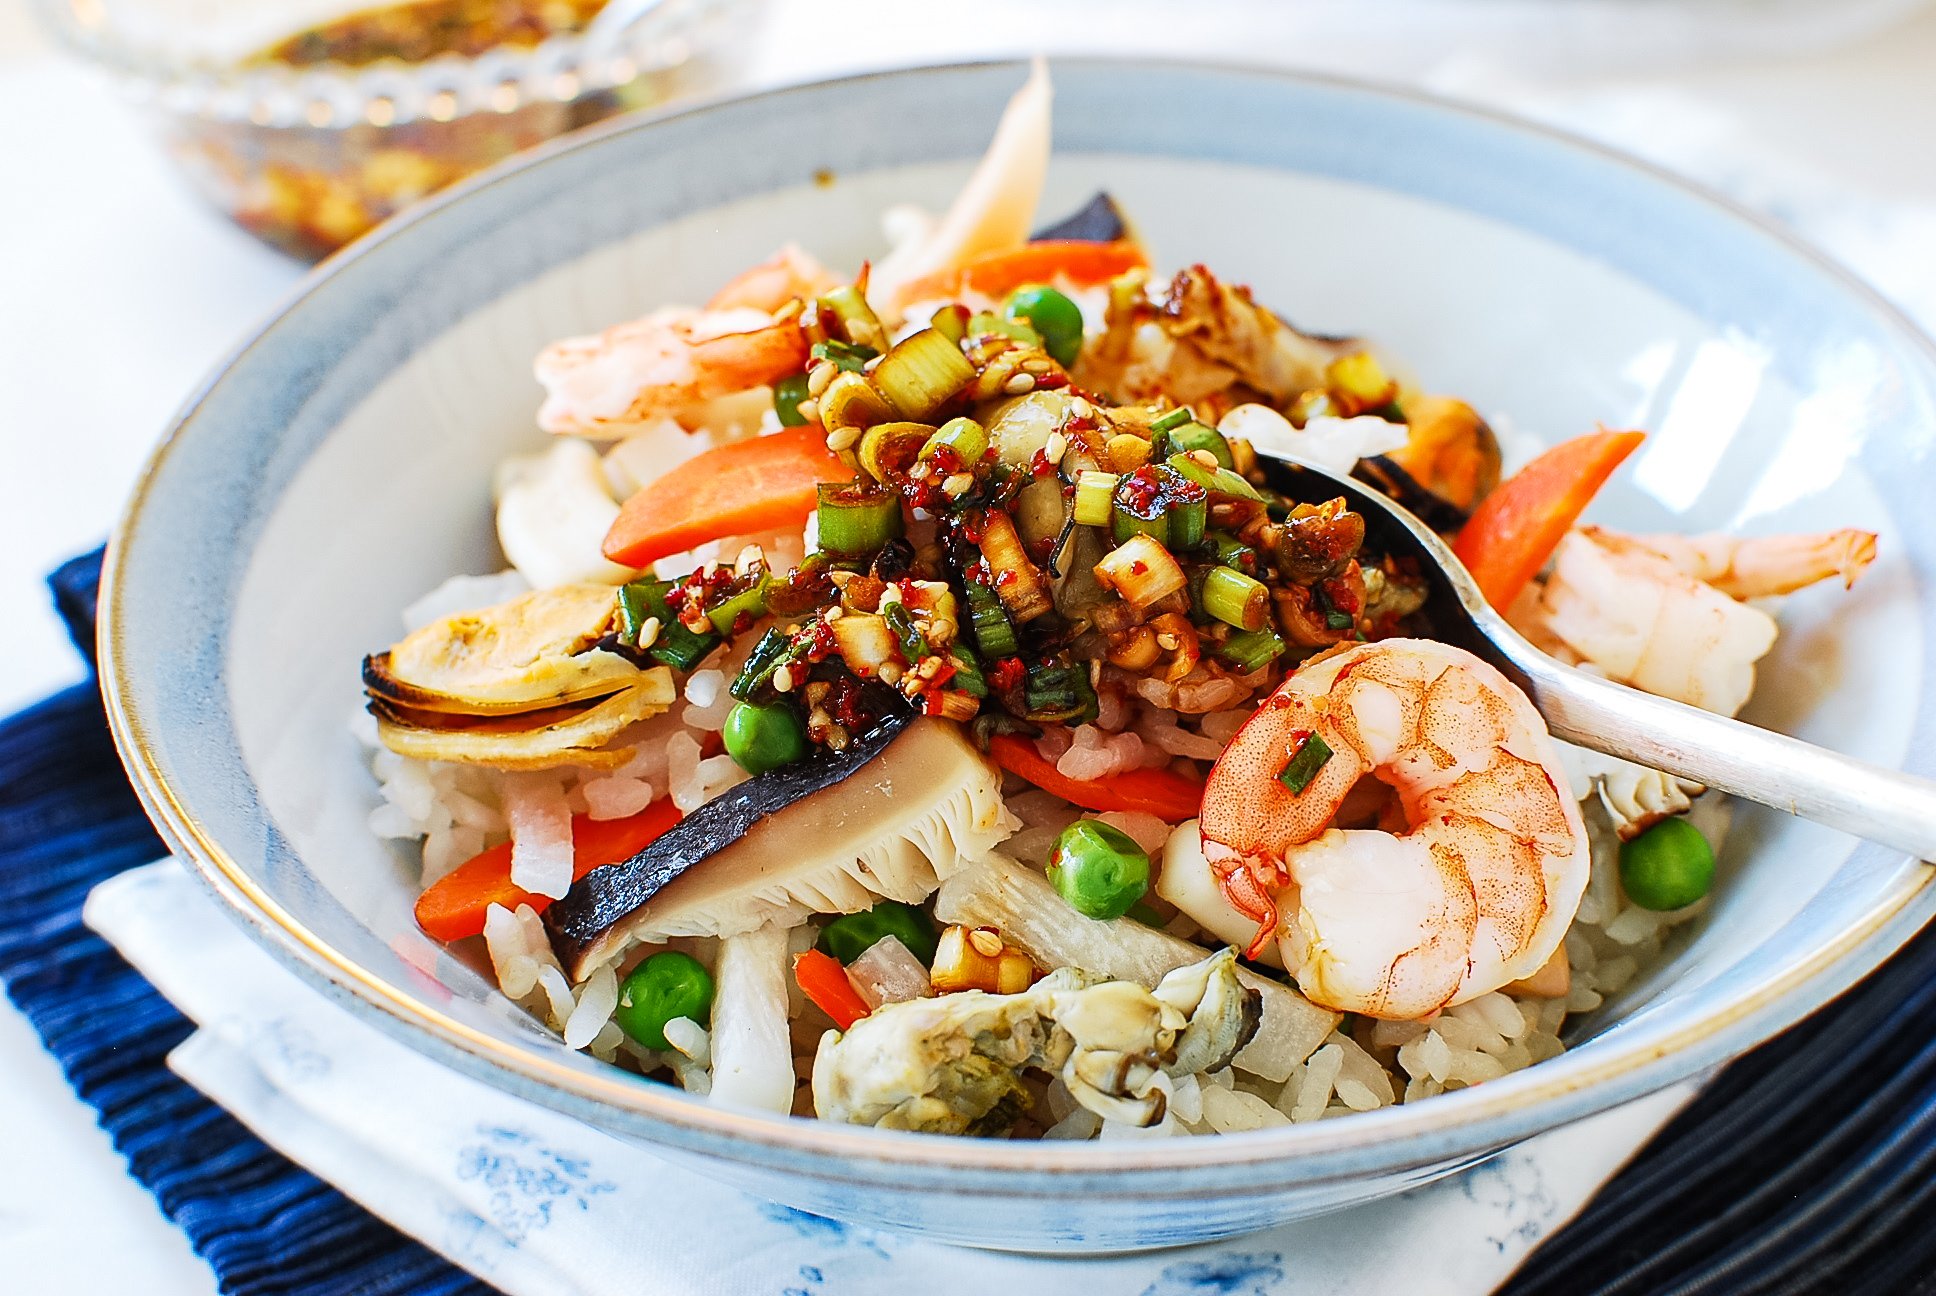 DSC 4156 3 - Haemul Bap (Seafood Rice Bowl)